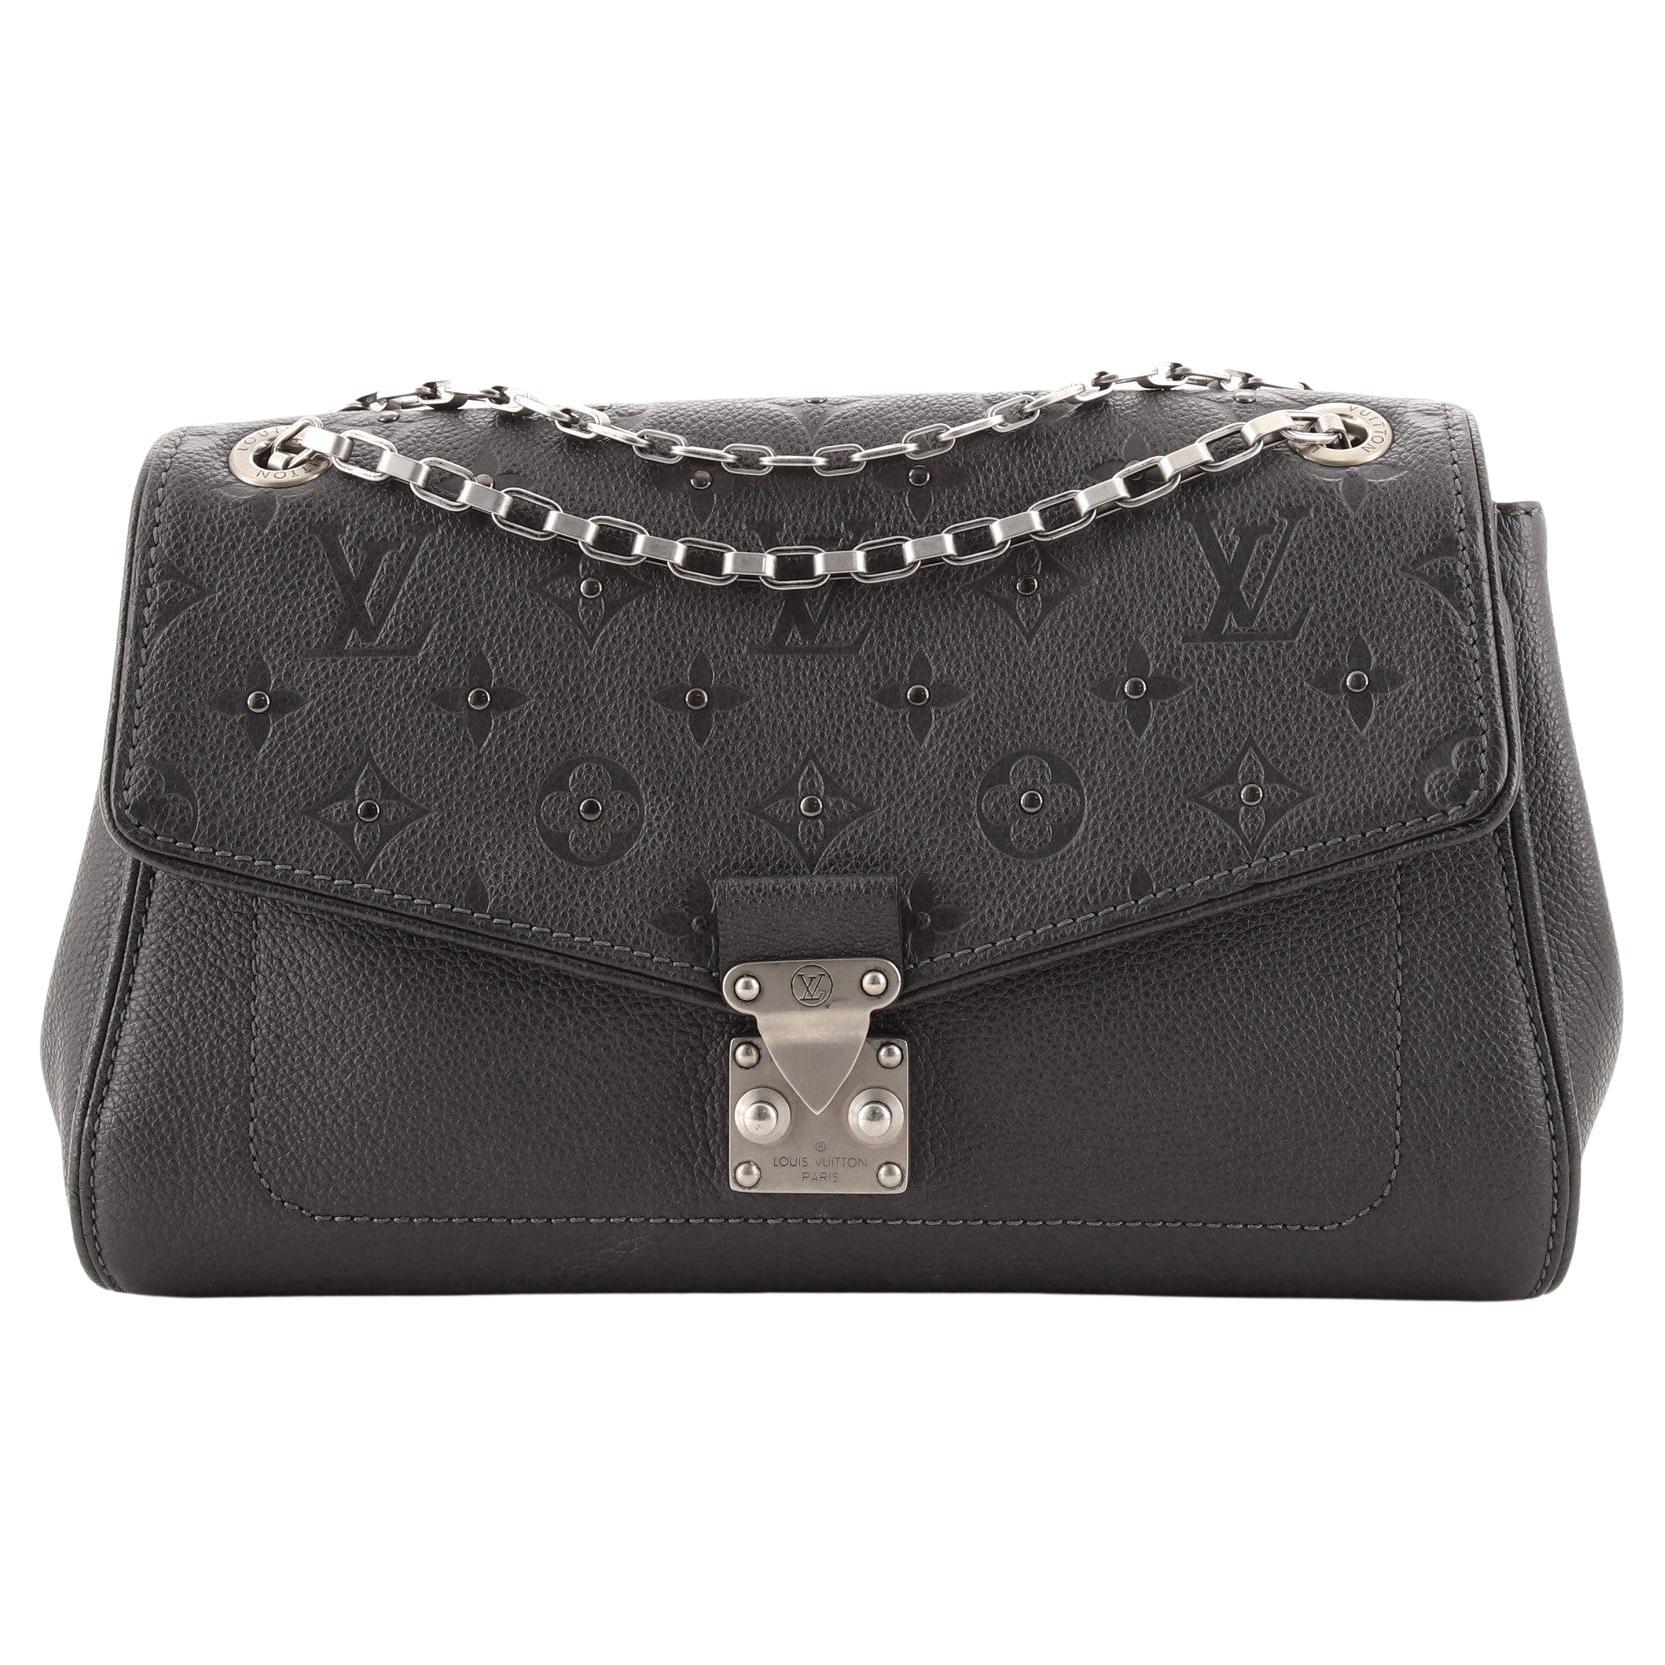 Louis Vuitton Saint Germain Handbag Studded Monogram Empreinte Leather PM